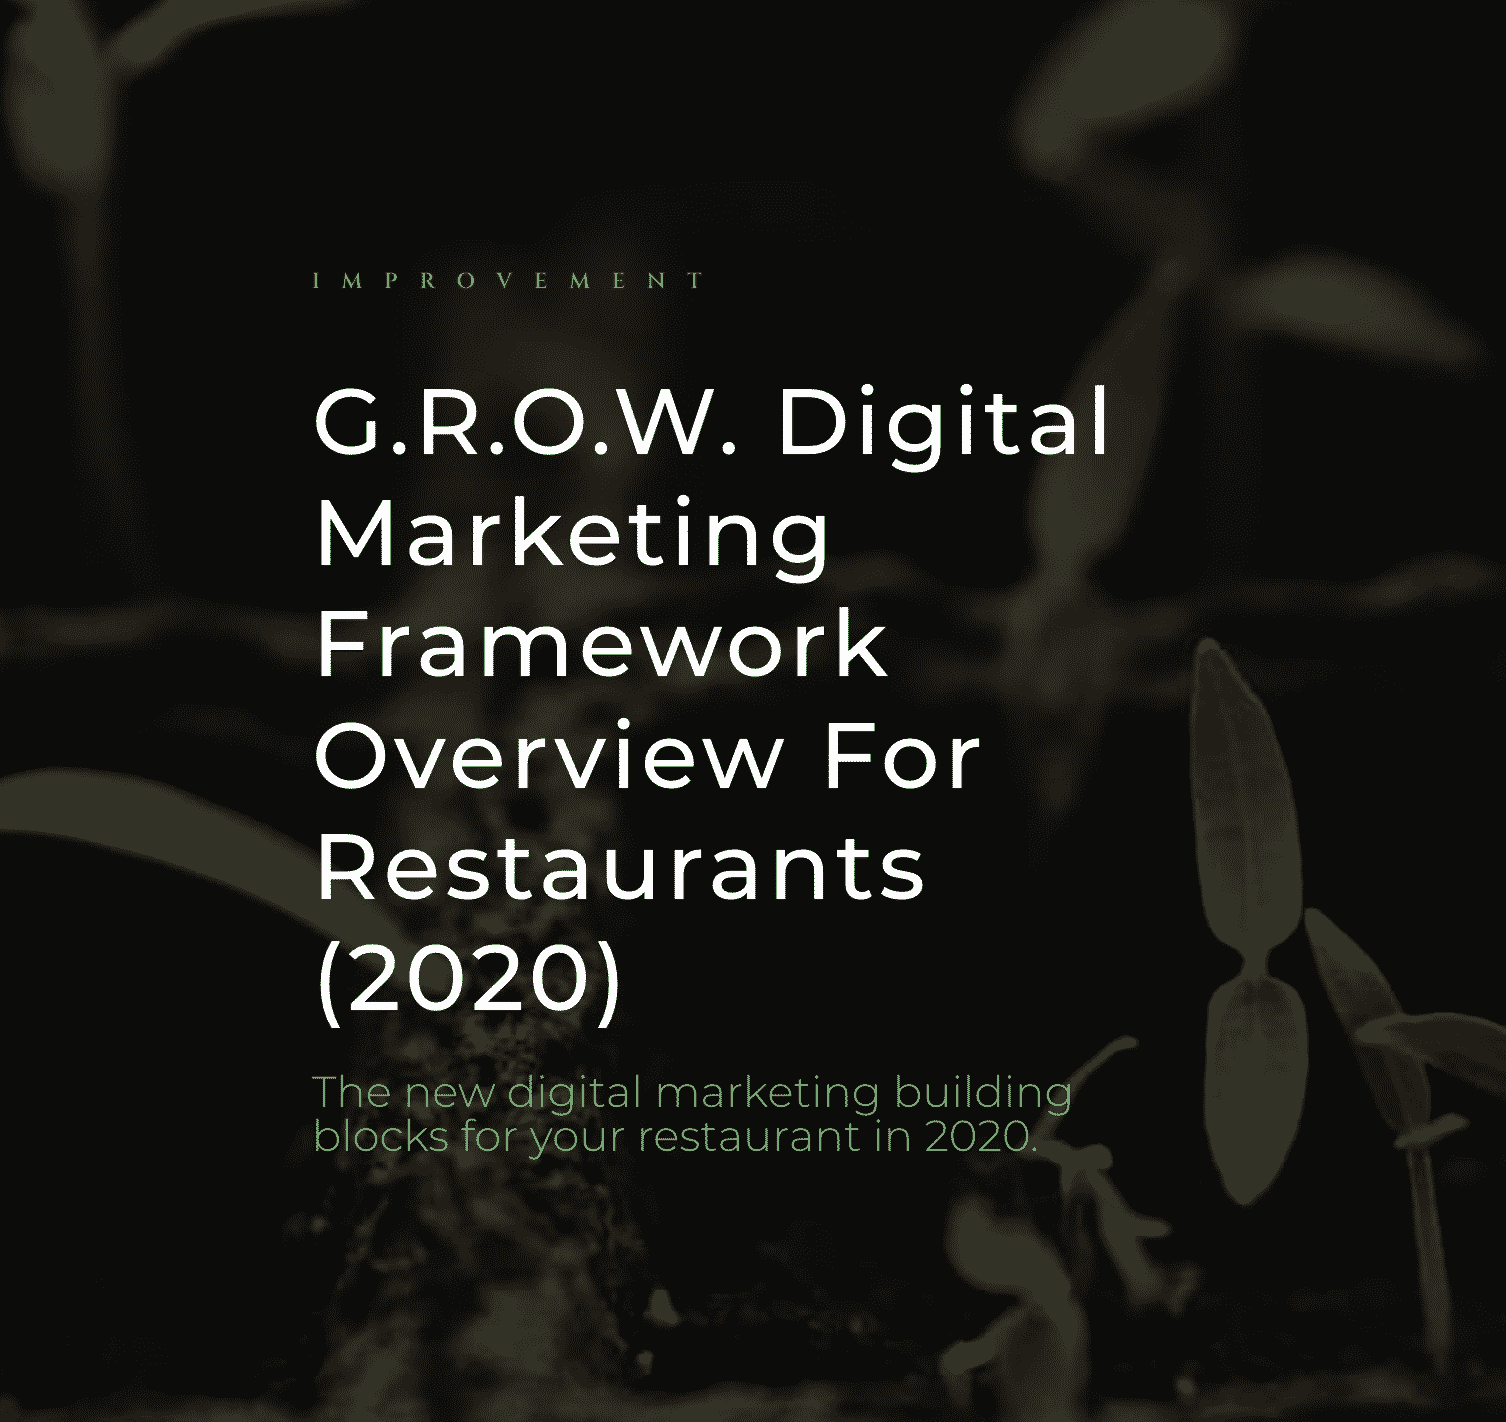 G.R.O.W. Digital Marketing Framework Overview For Restaurants (2020)